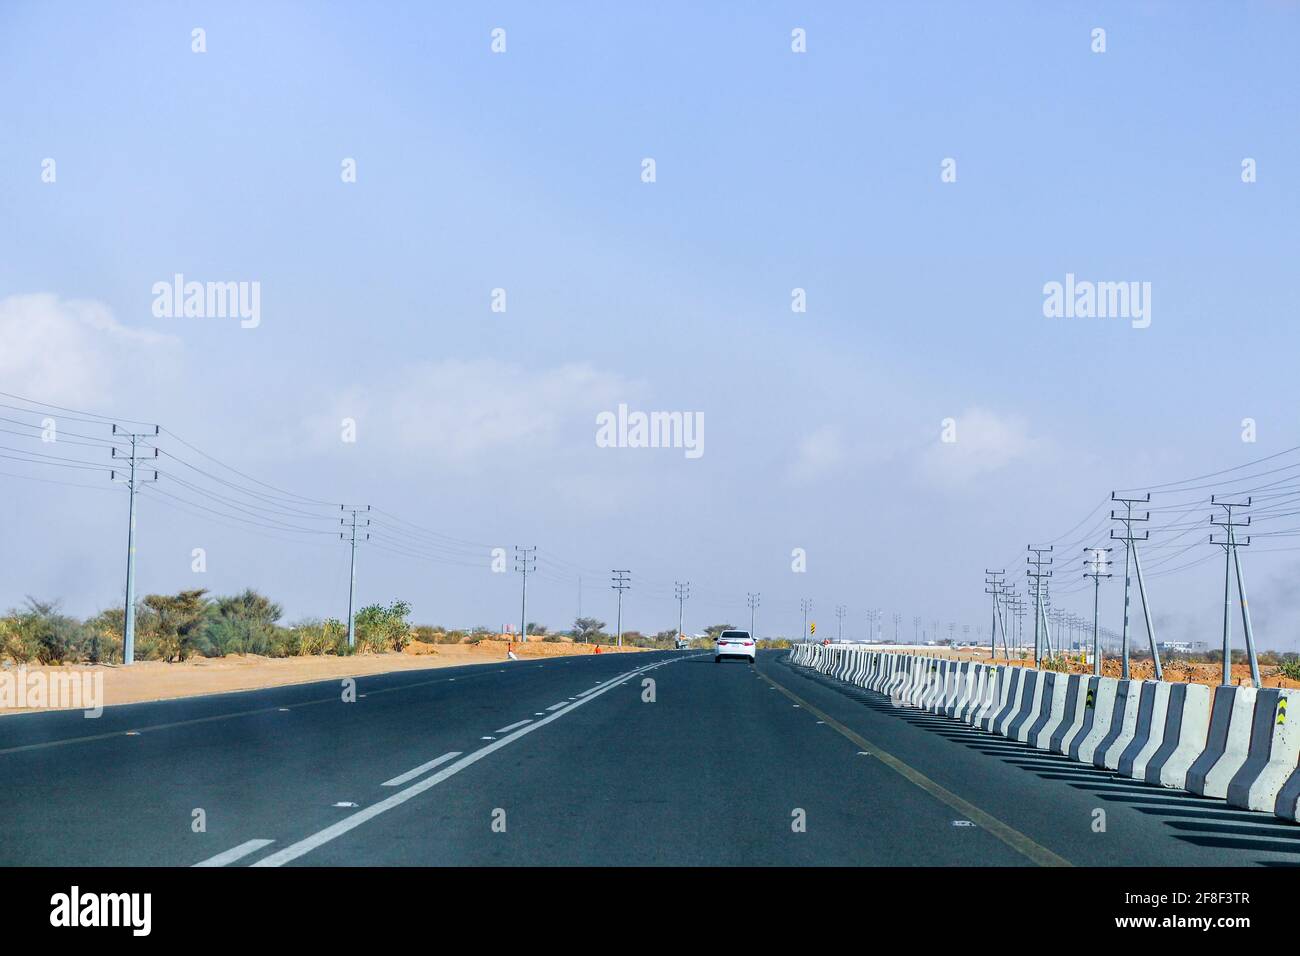 saudi arabian desert road Stock Photo